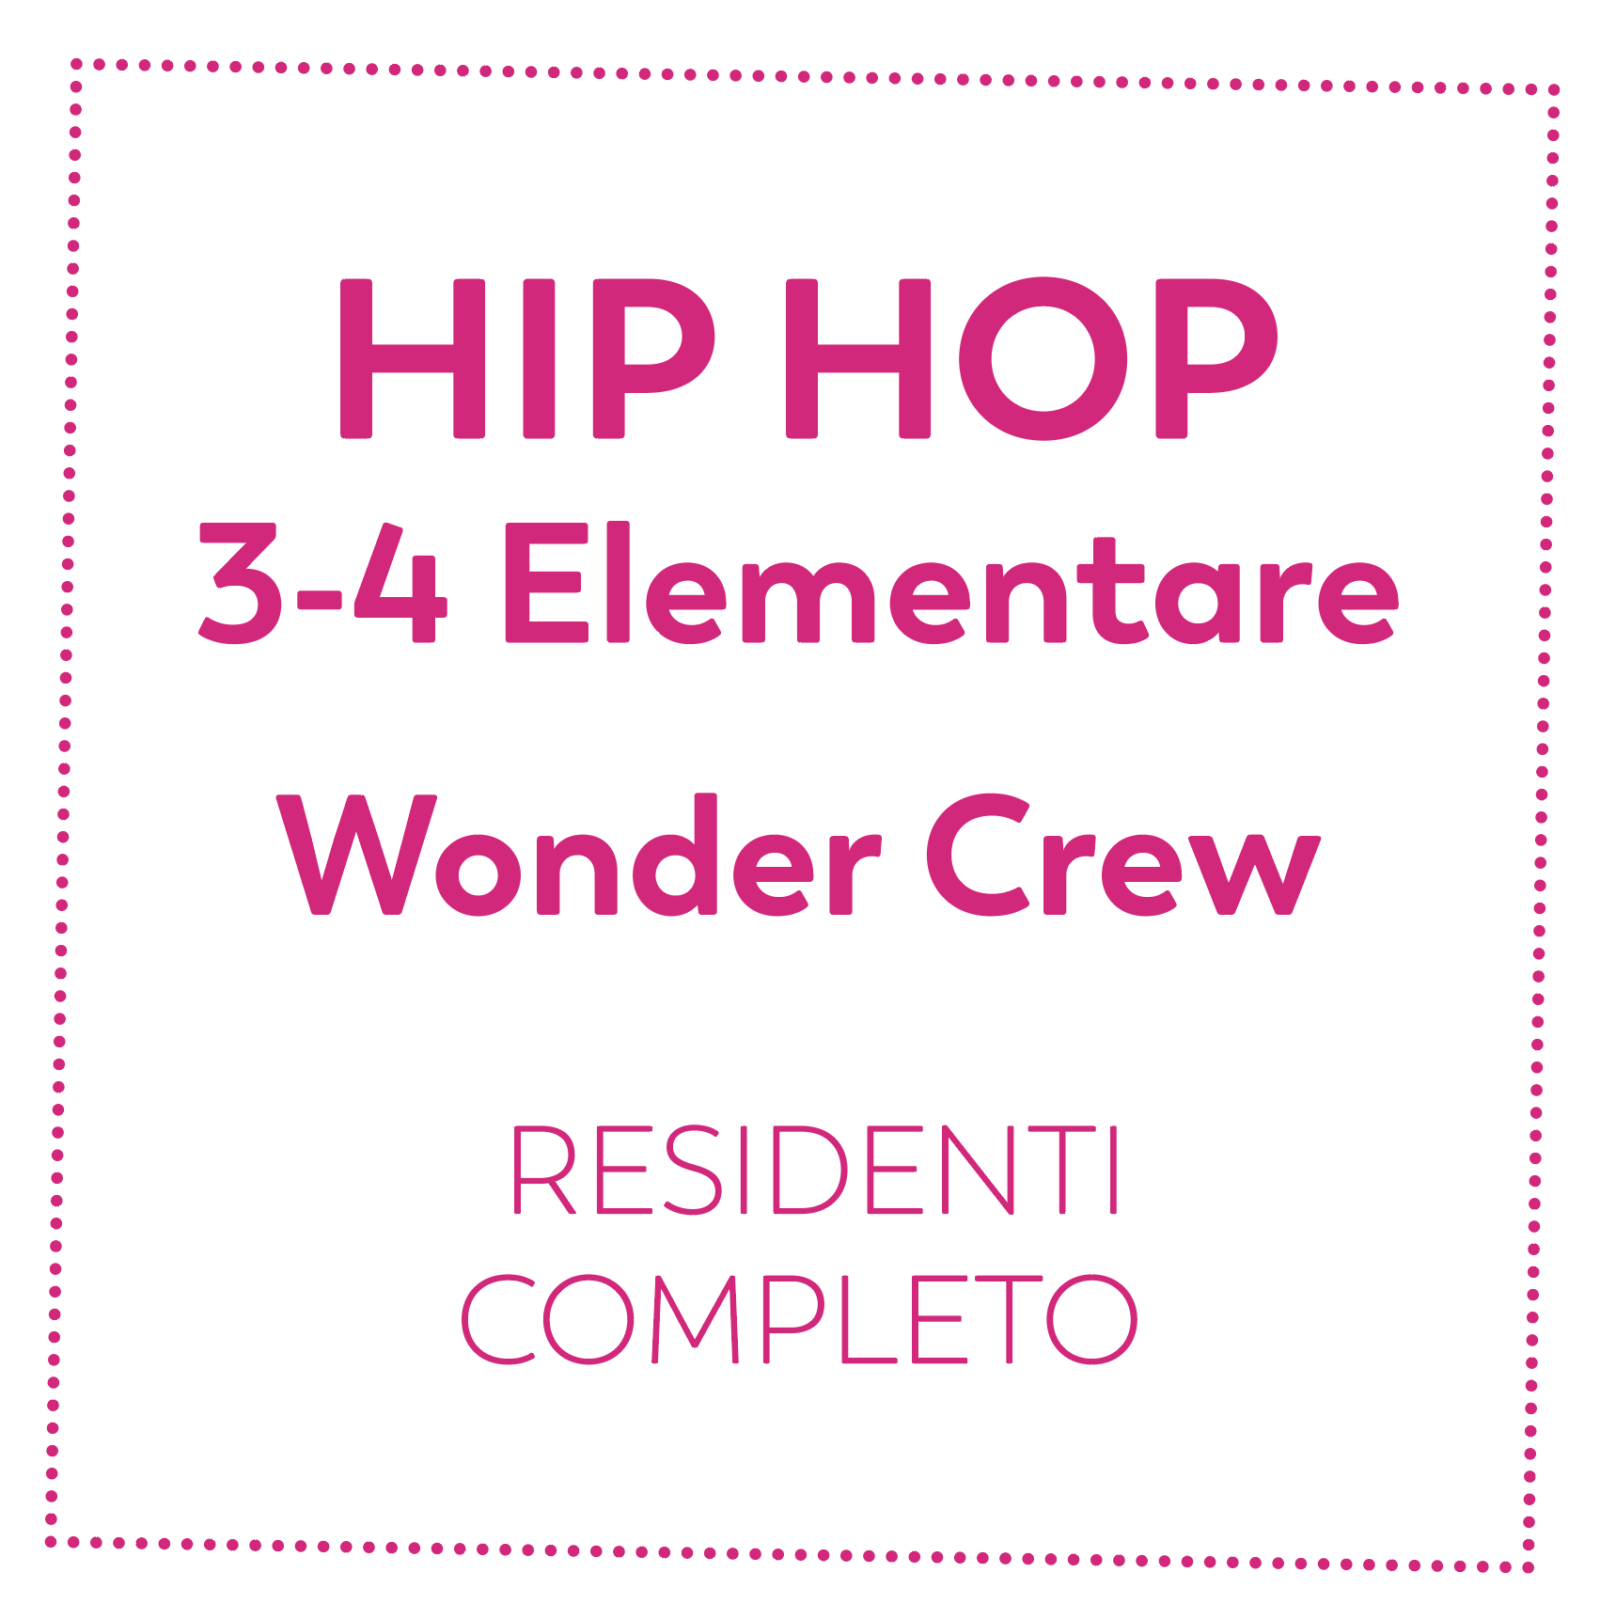 HIP HOP 3-4 ELEM - RESIDENTI - COMPLETO